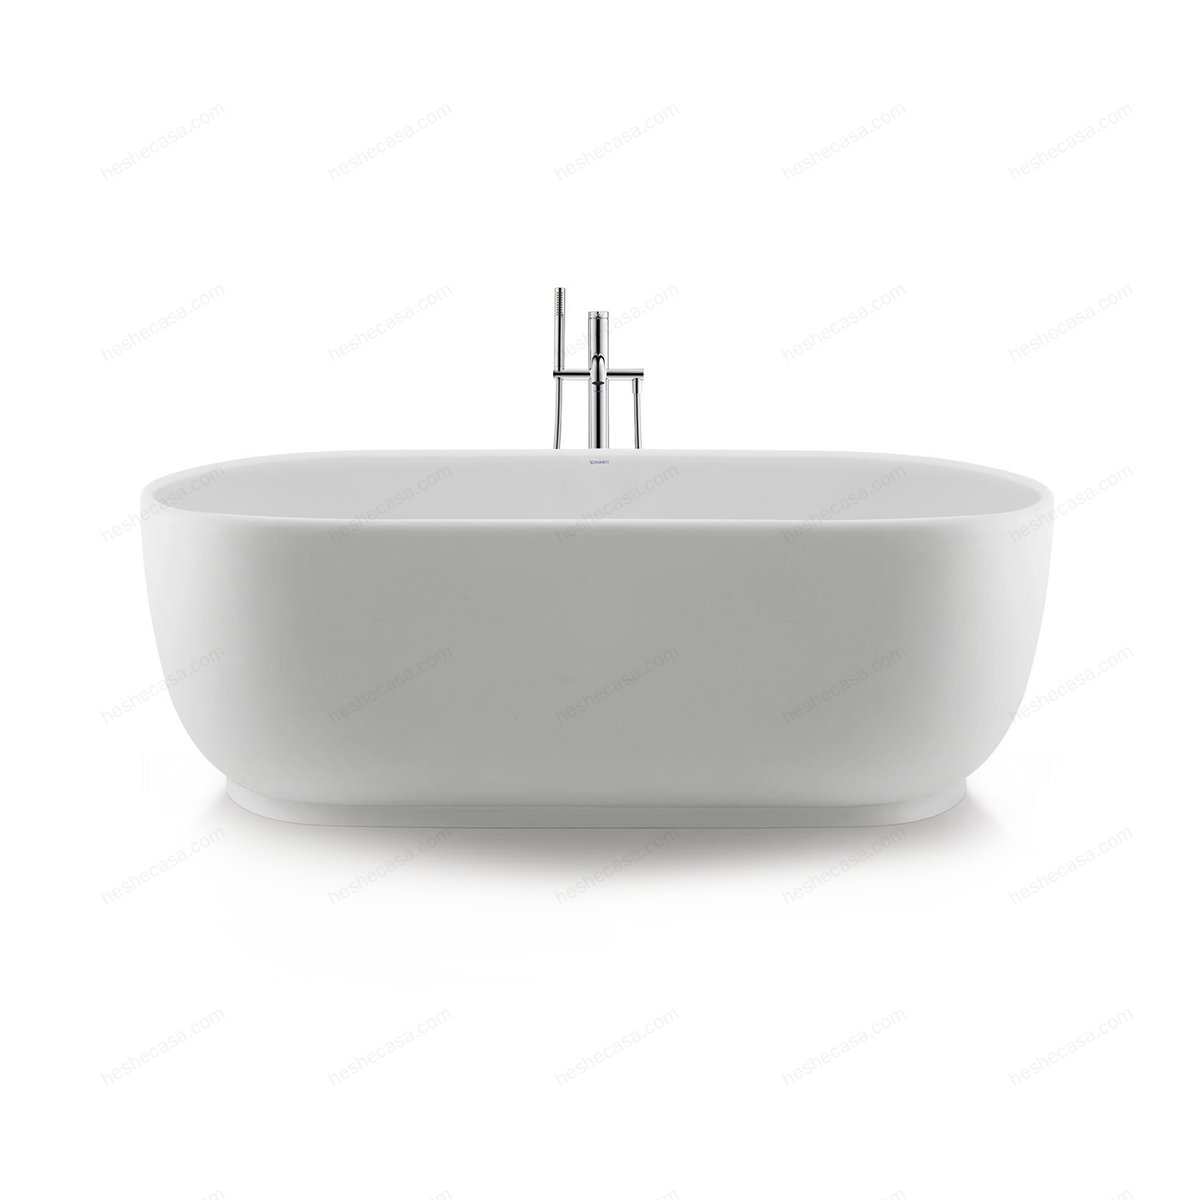 Luv浴缸